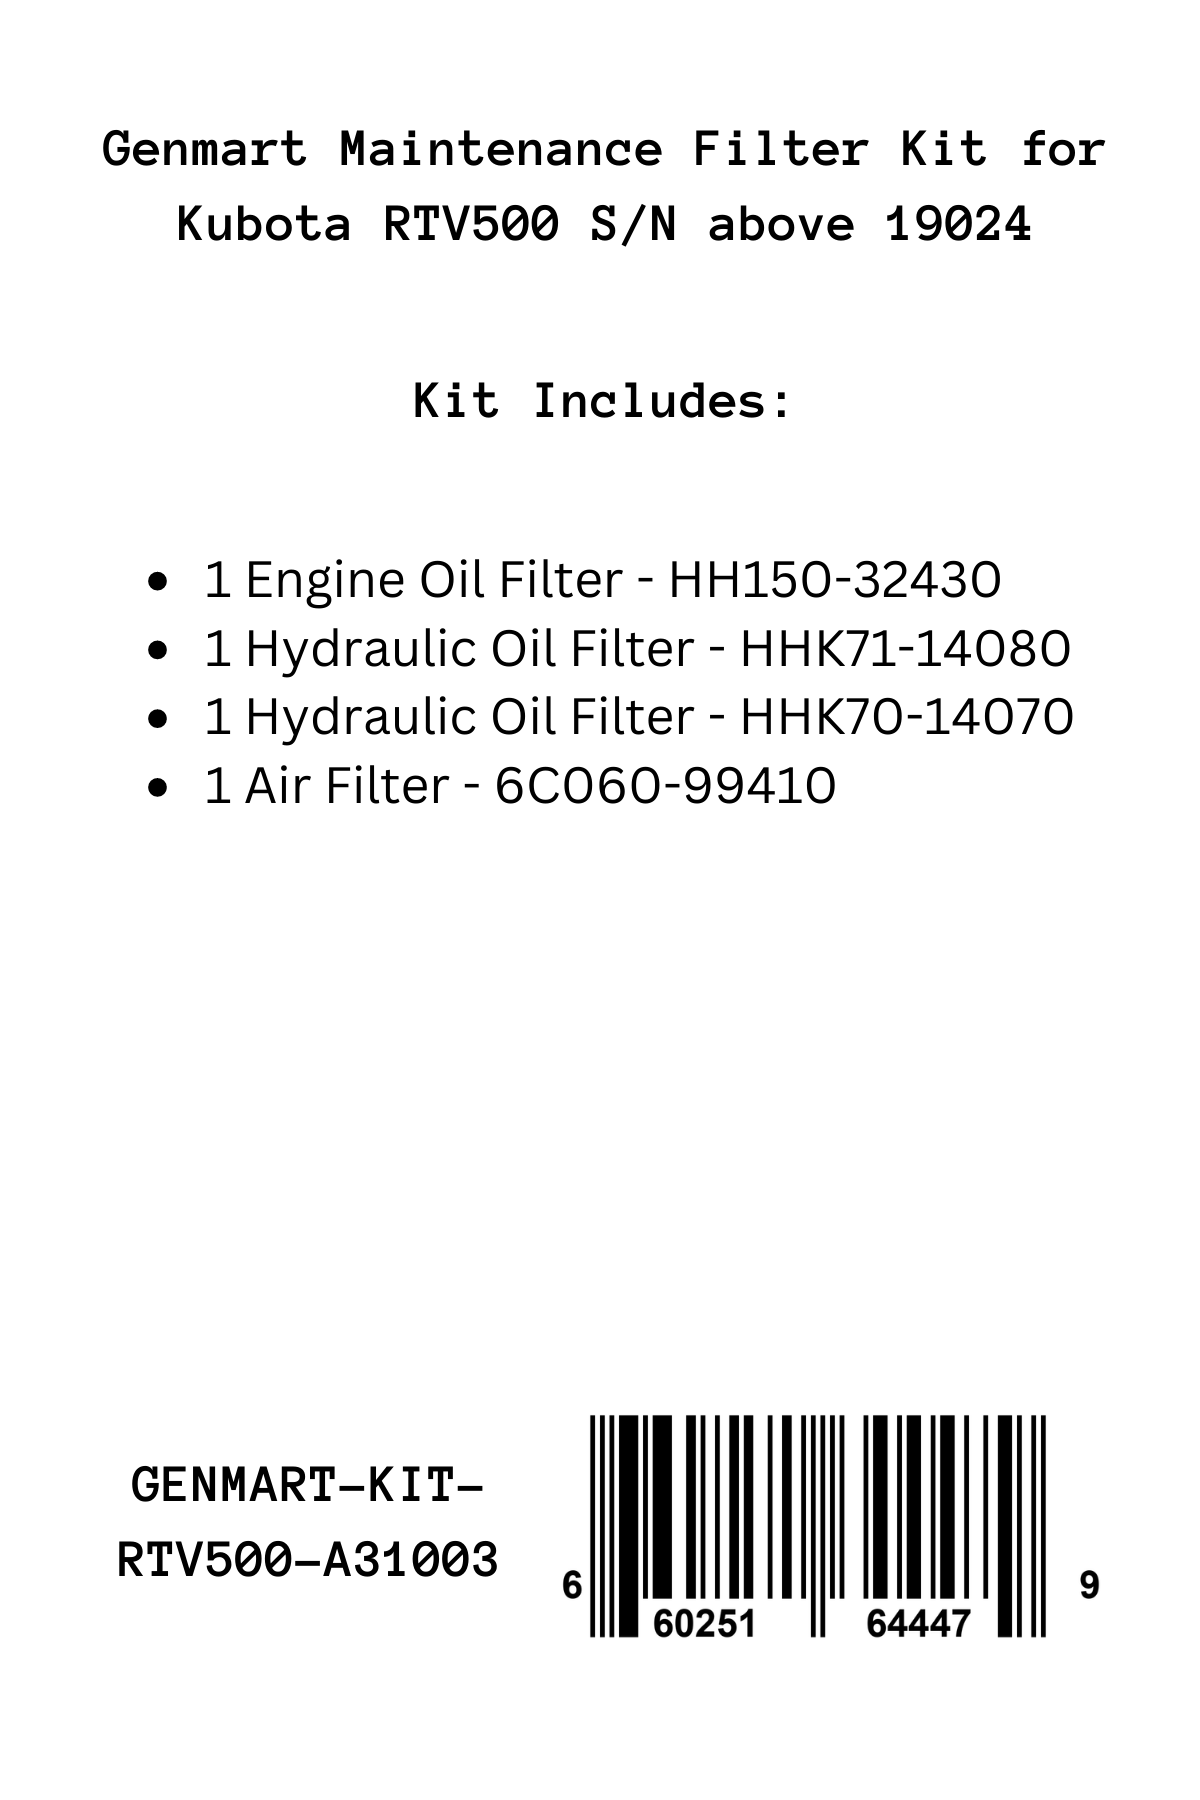 Genmart Maintenance Filter Kit for Kubota RTV500 (serial number 19025 and above)